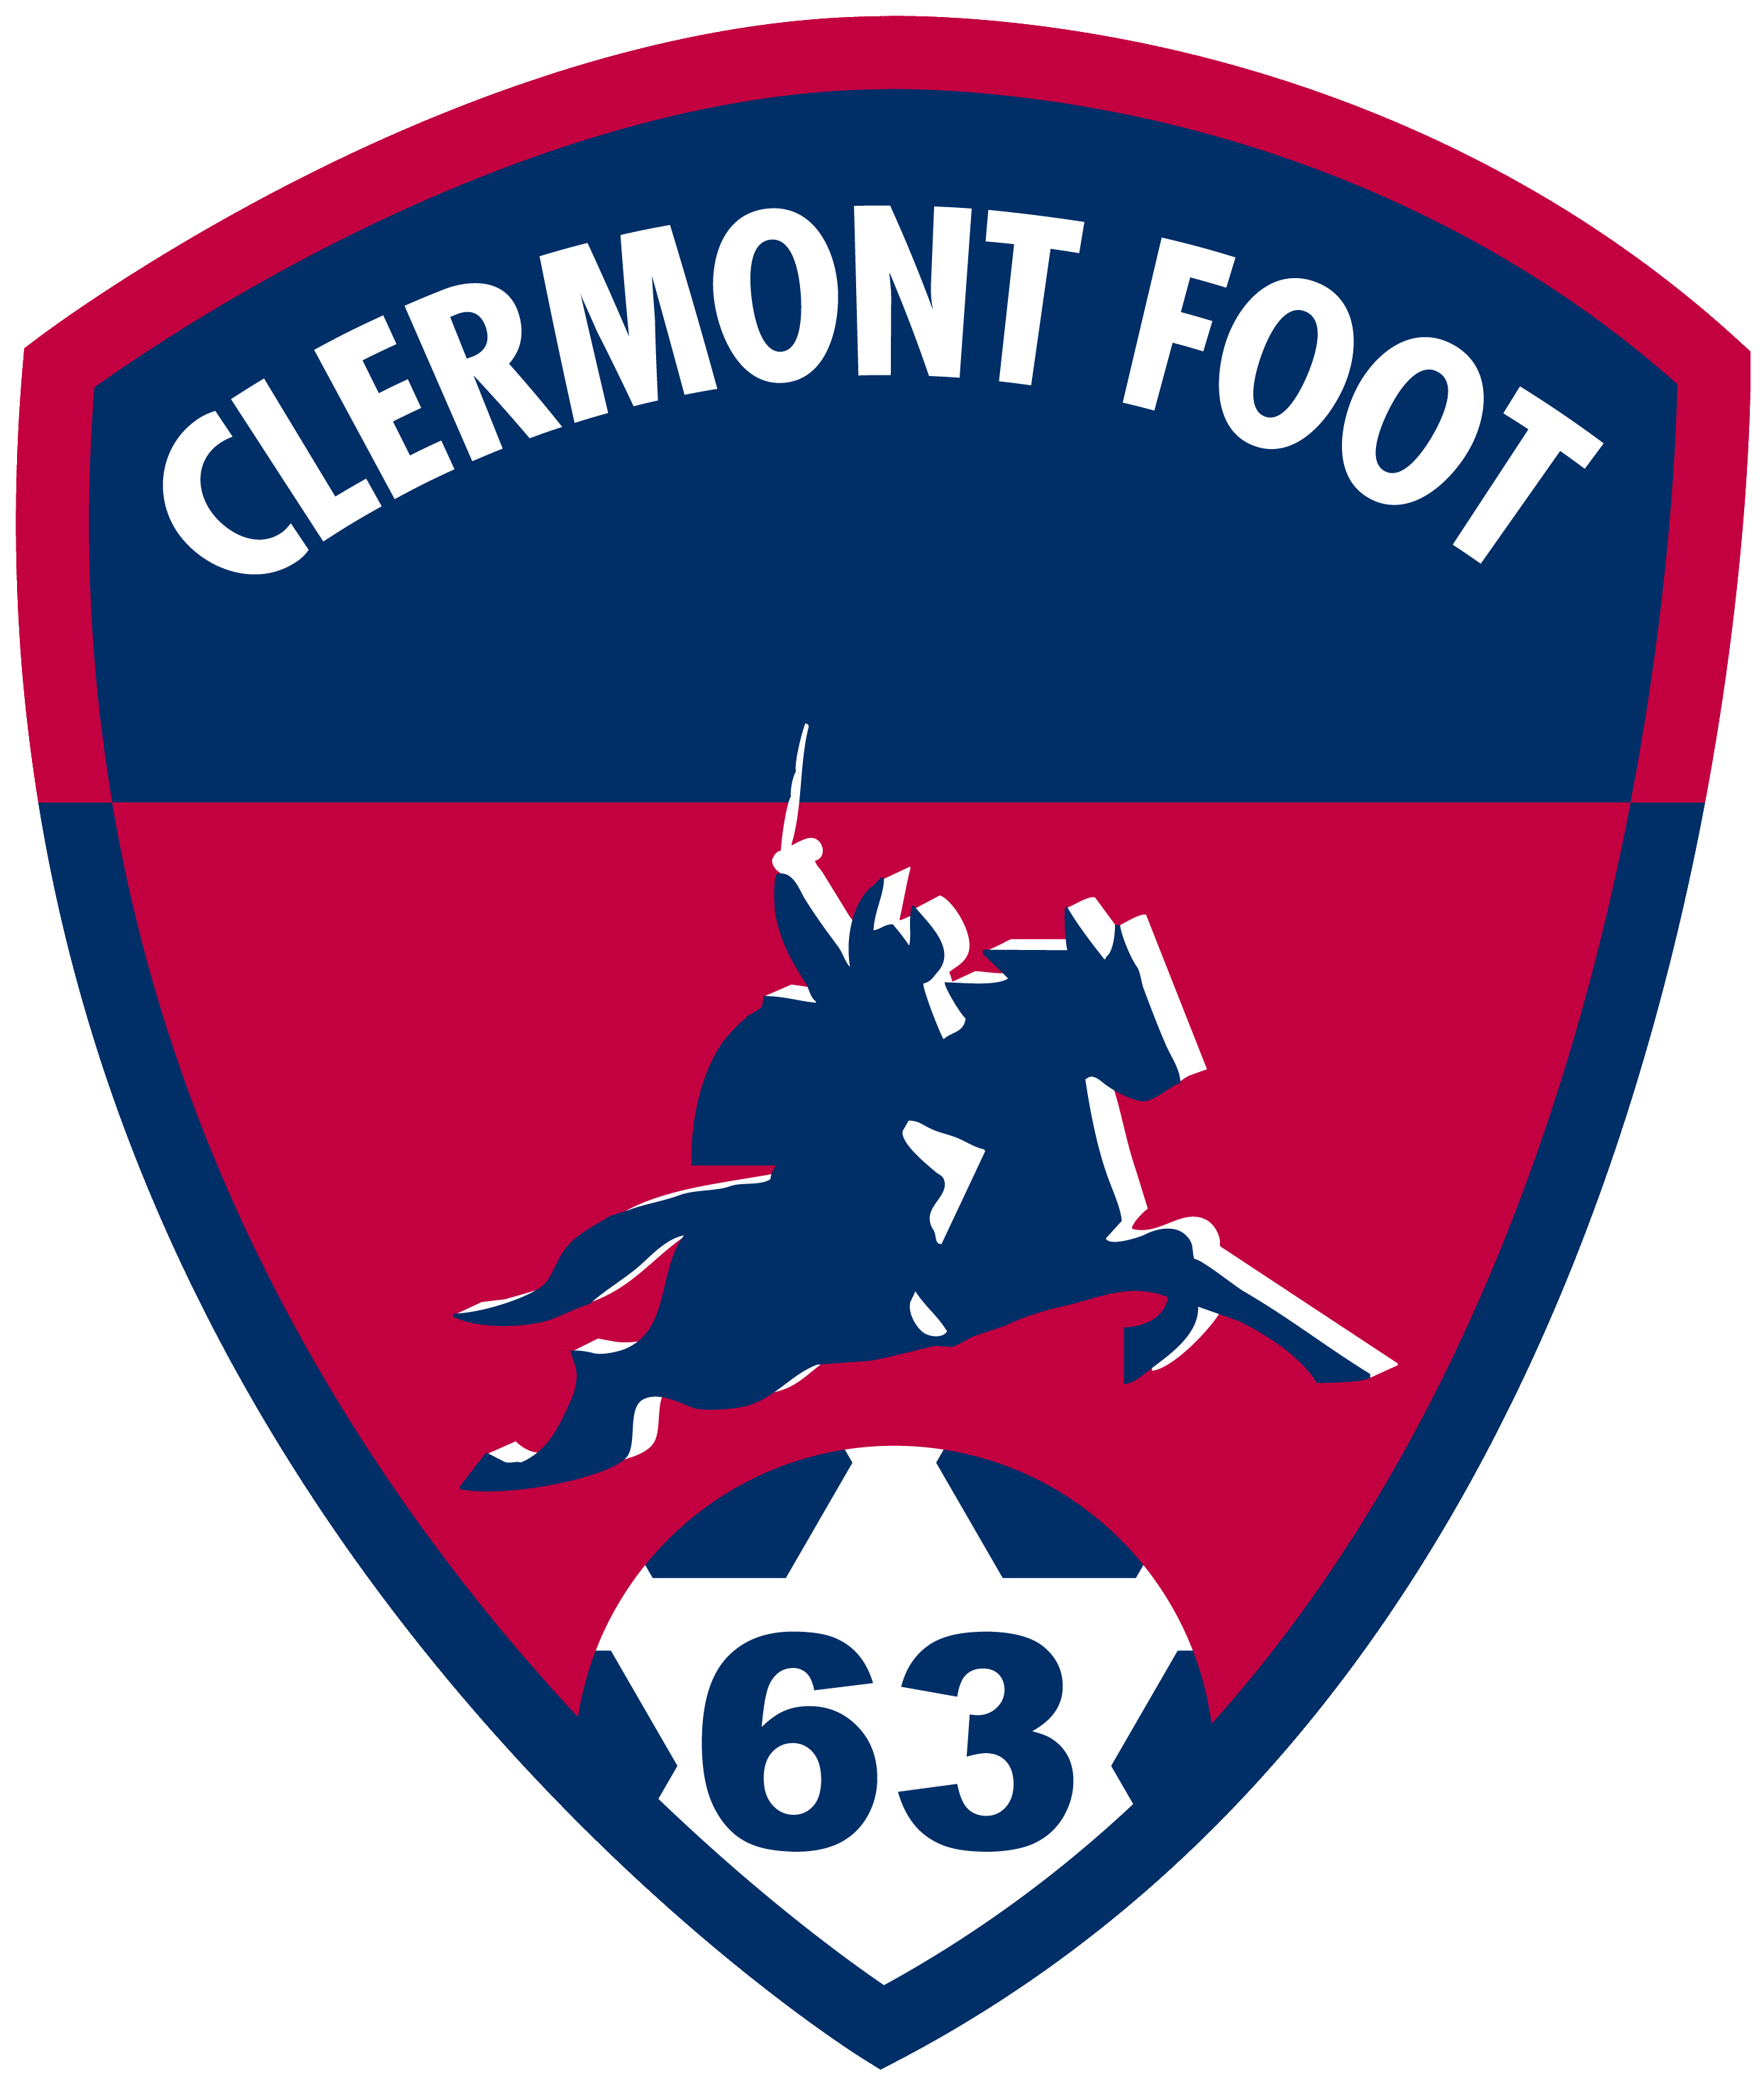 Clermont vs Monaco: Home team to break their successful streak